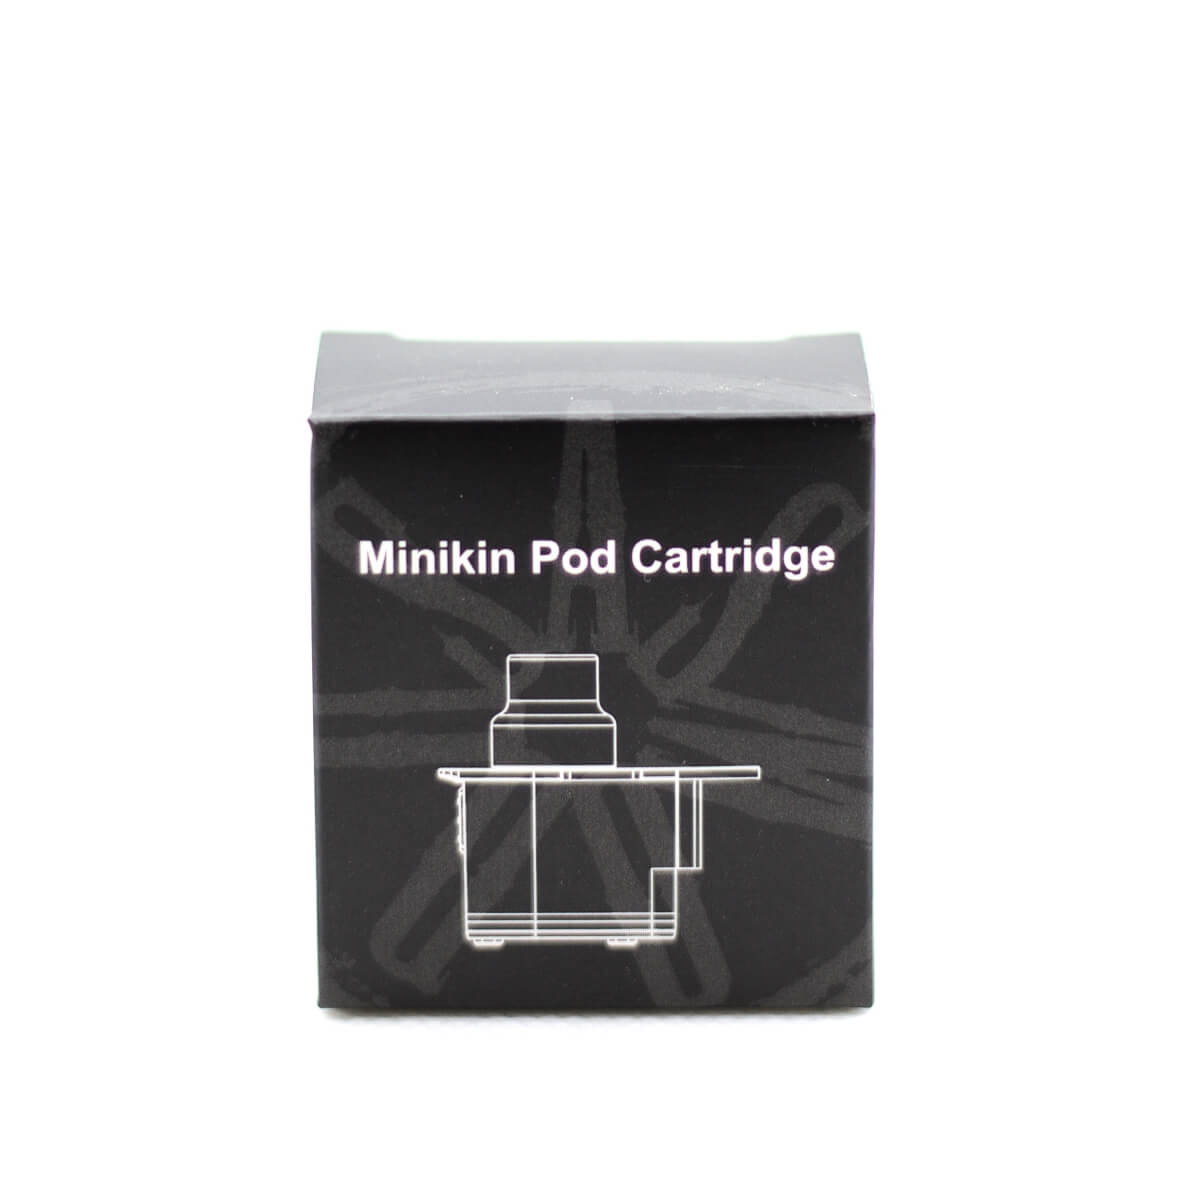 Small black box containing Asmodus Minikin pod cartridge